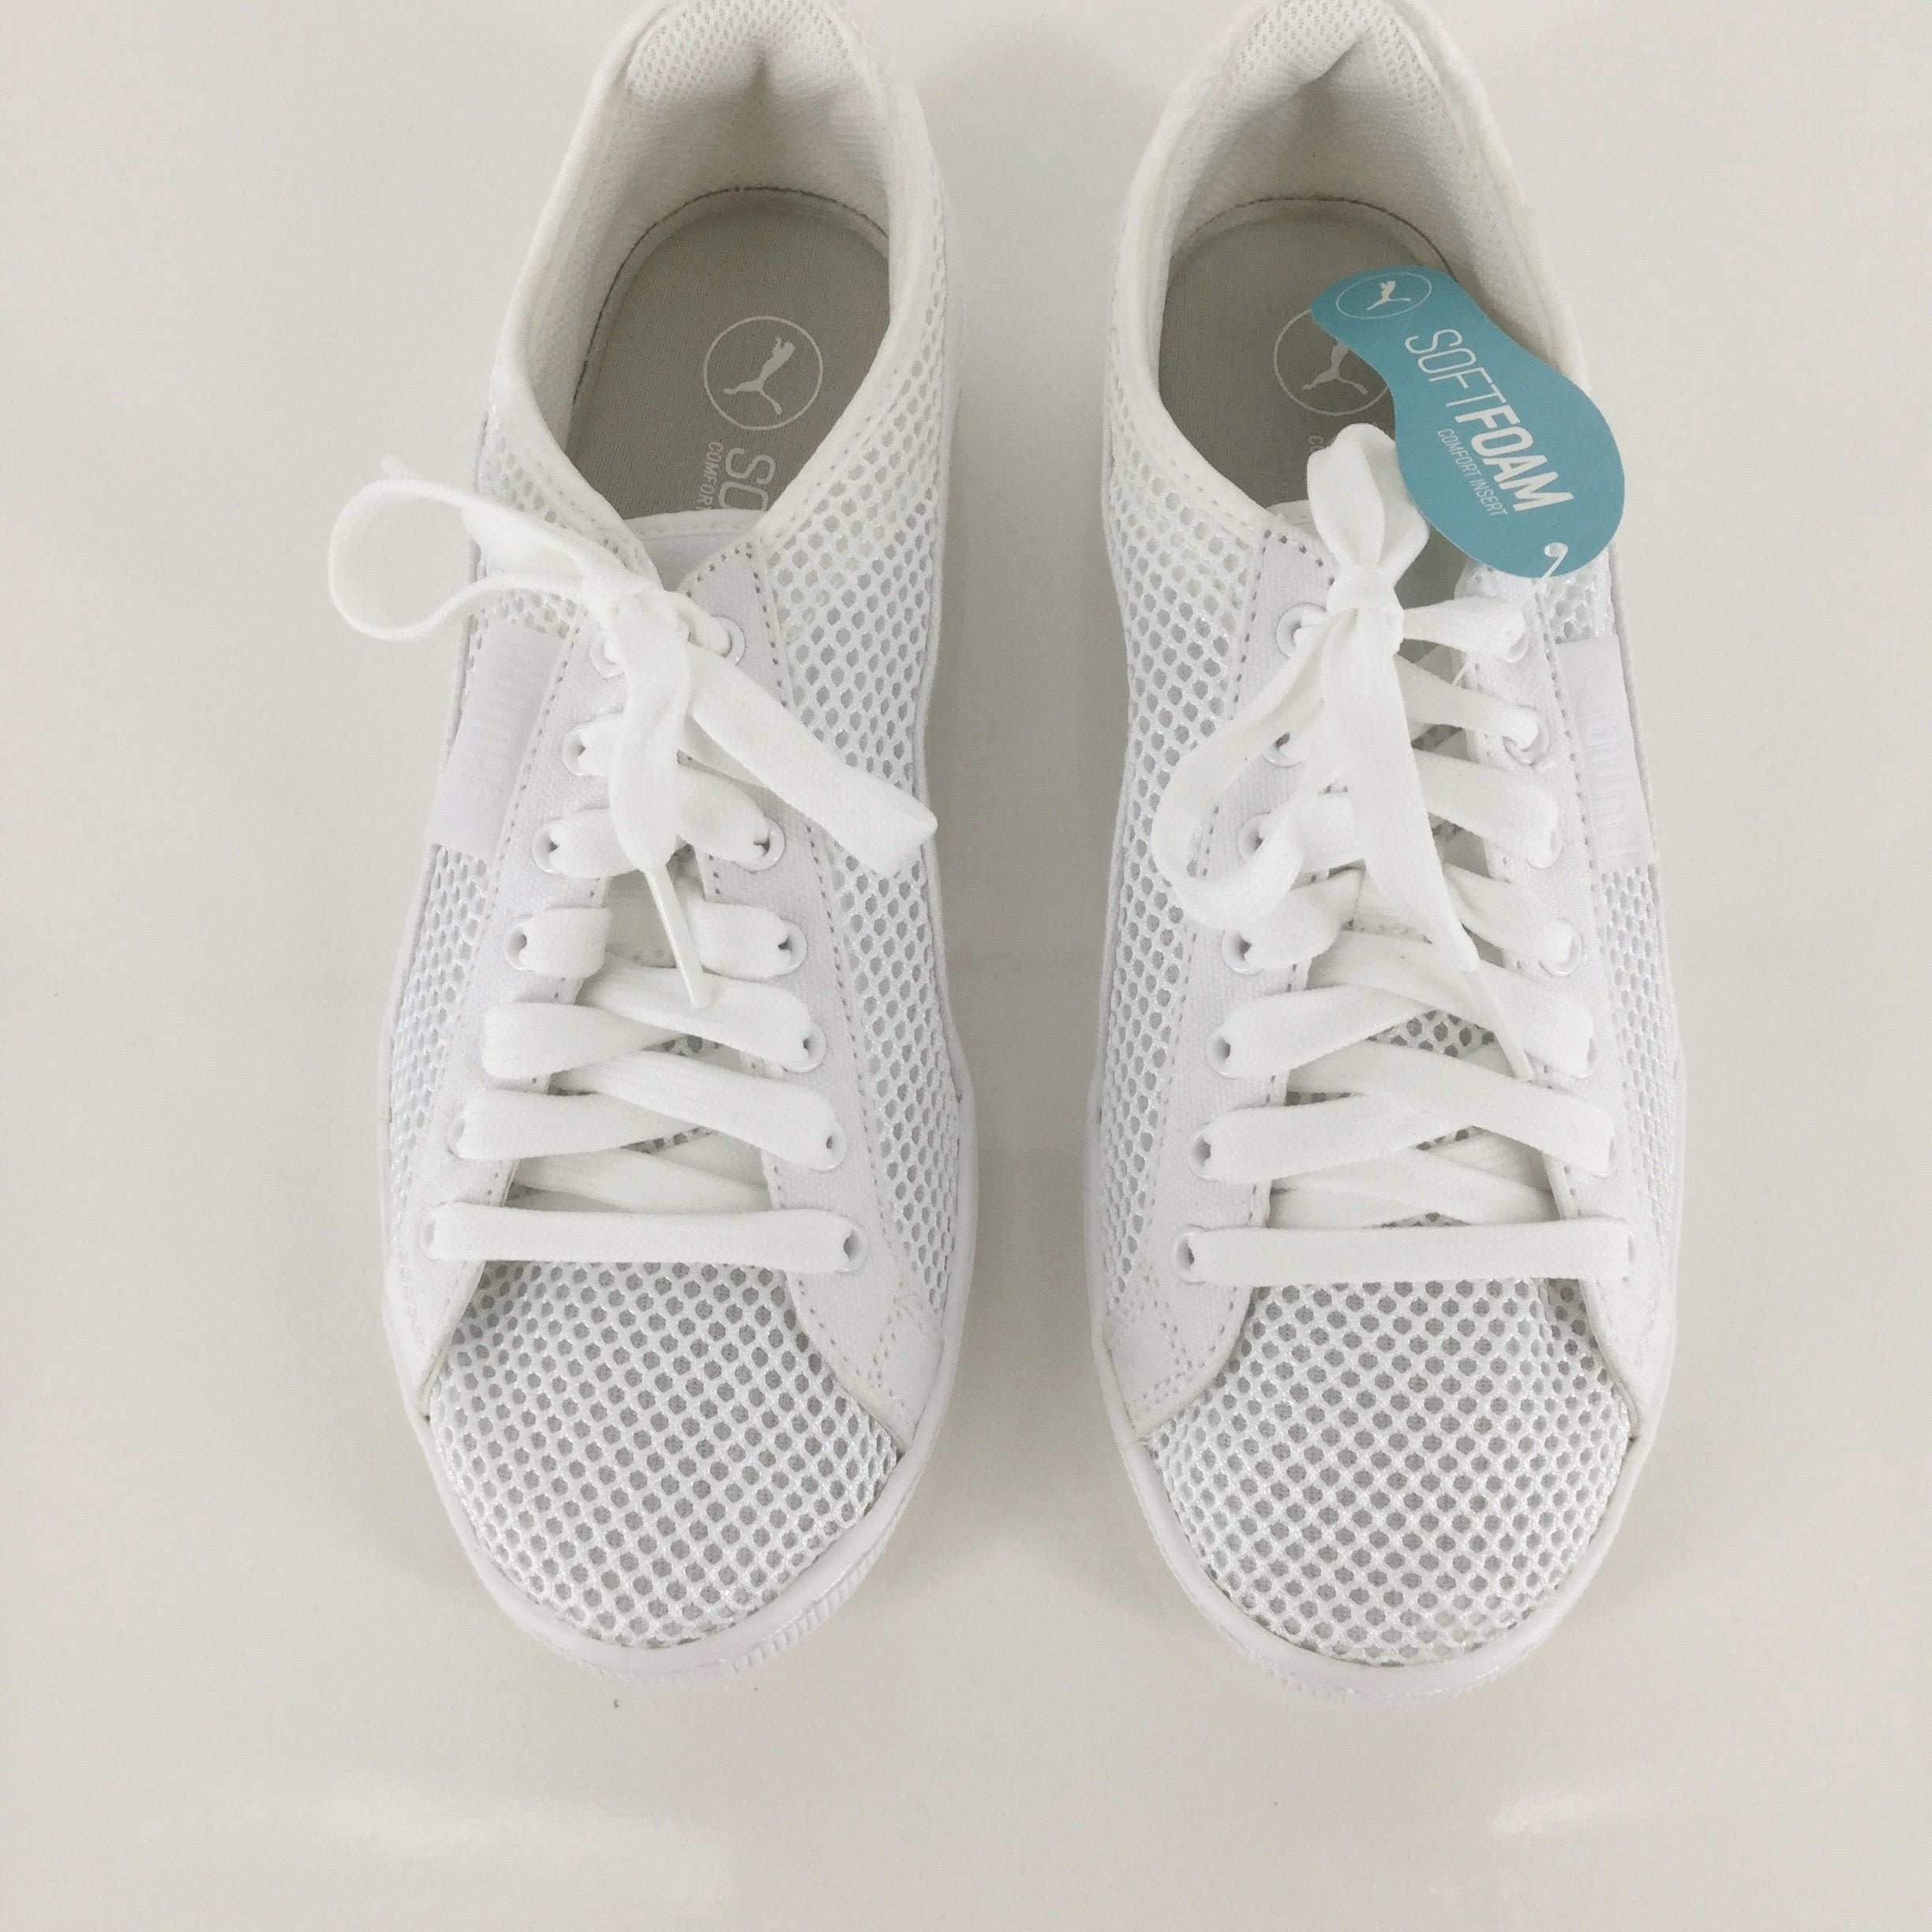 puma soft foam tennis shoes